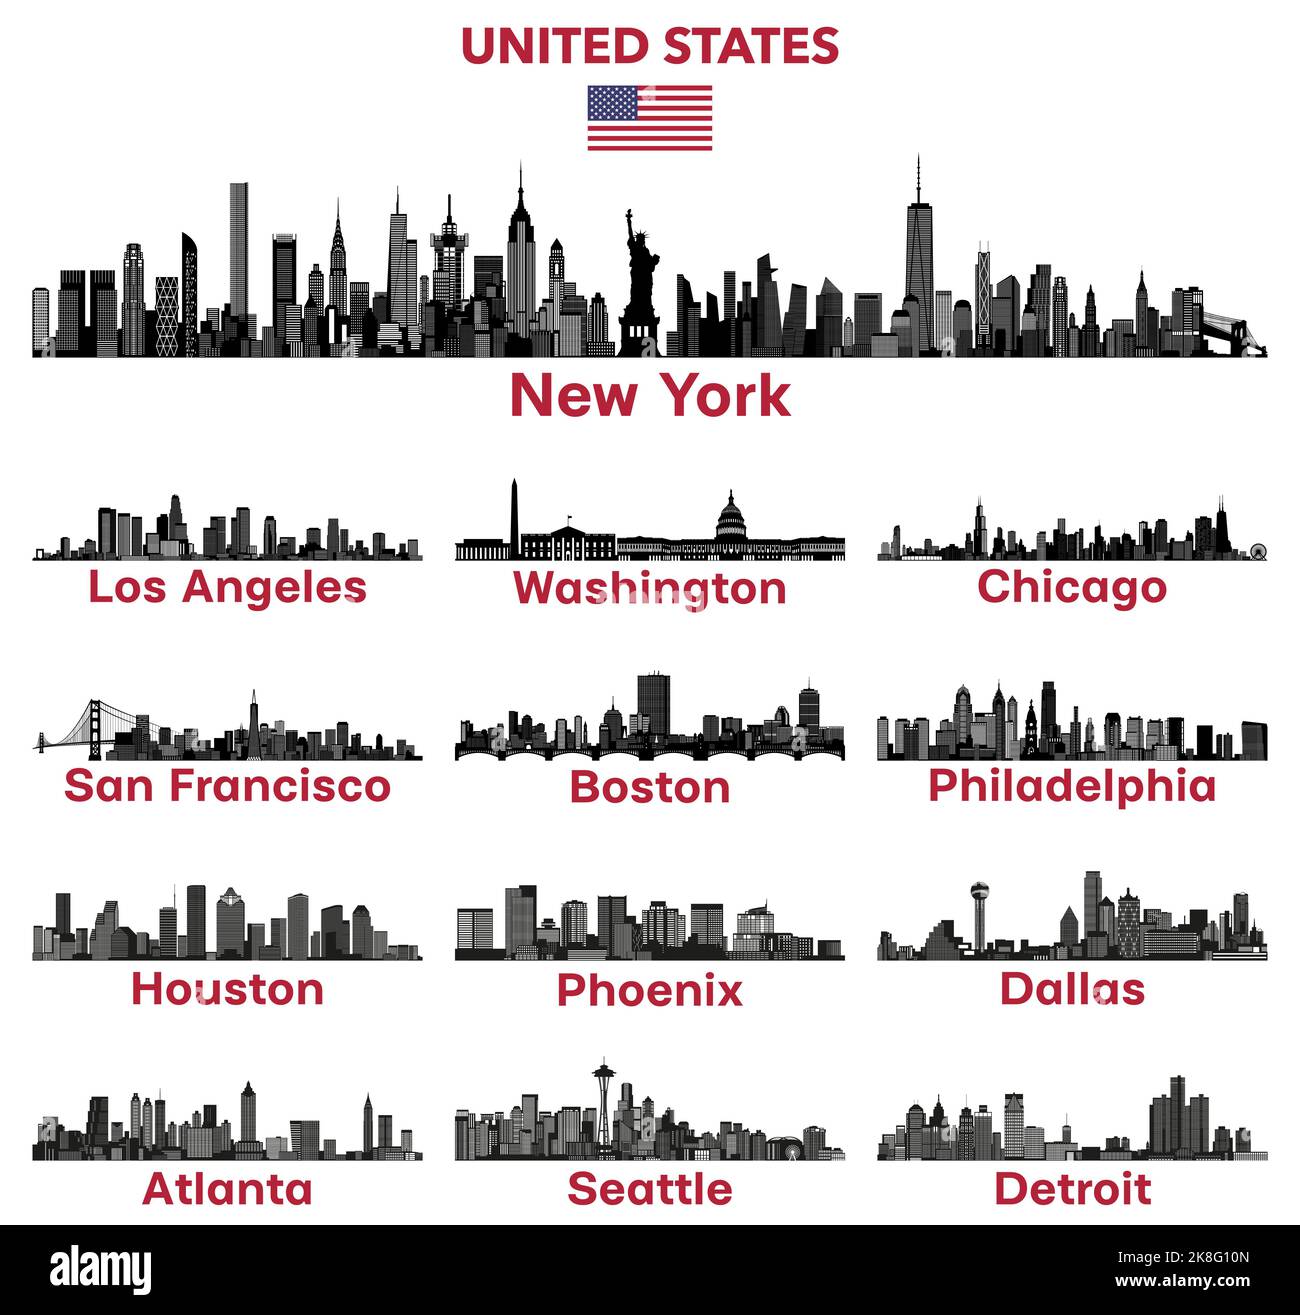 United States Cities Skylines Silhouetten Vektor-Illustrationen Stock Vektor